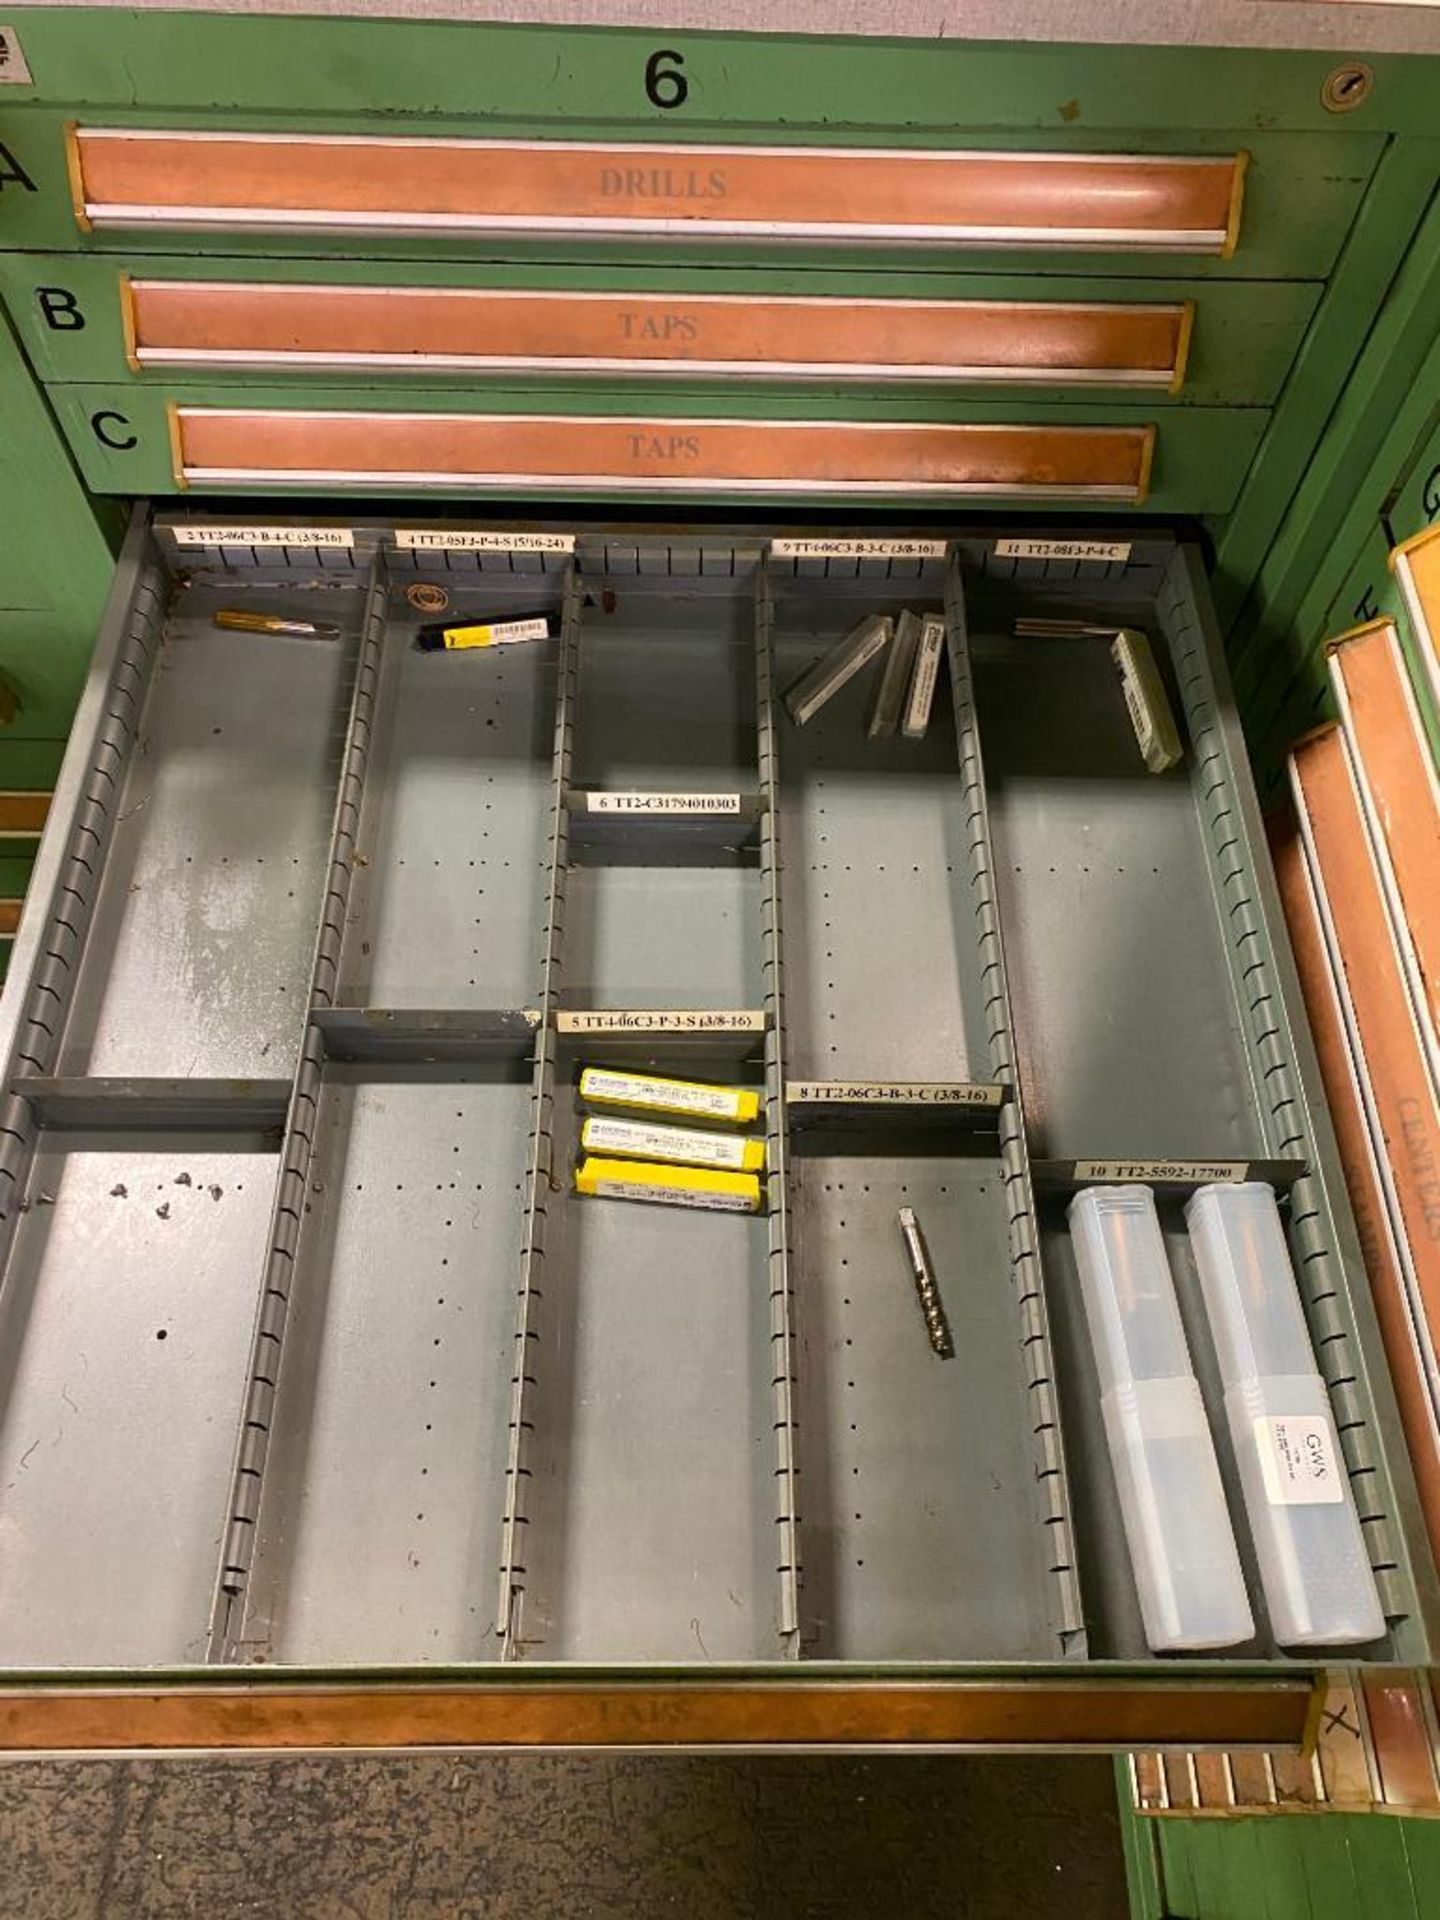 Stanley Vidmar 10-Drawer Cabinet w/ Drills, Taps - Image 5 of 10